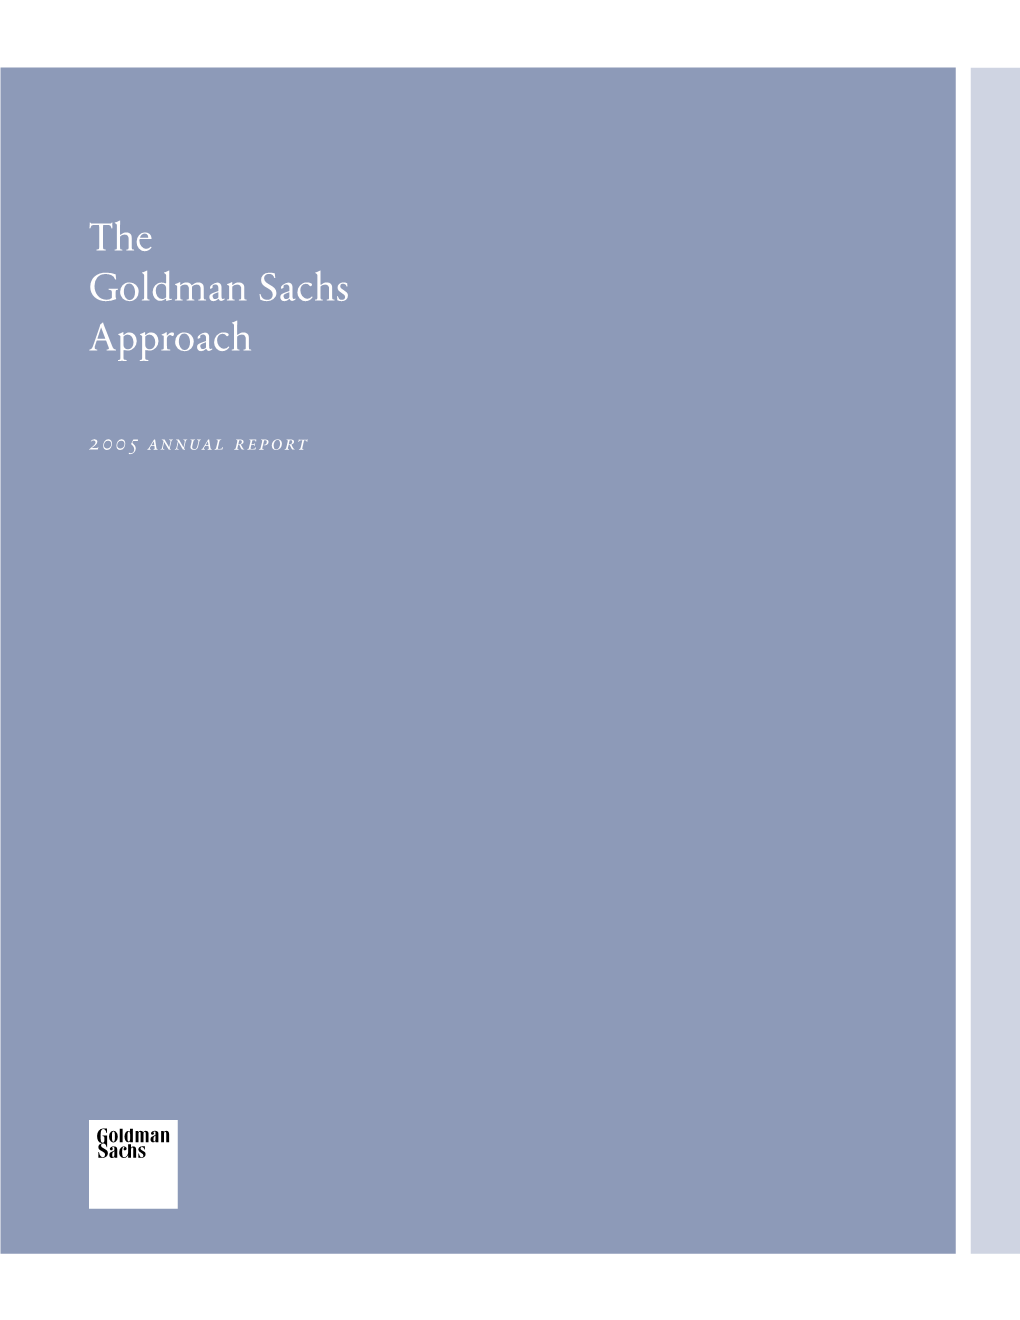 Annual Report Goldman Sachs 2005 Annual Report Annual 2005 Sachs Goldman